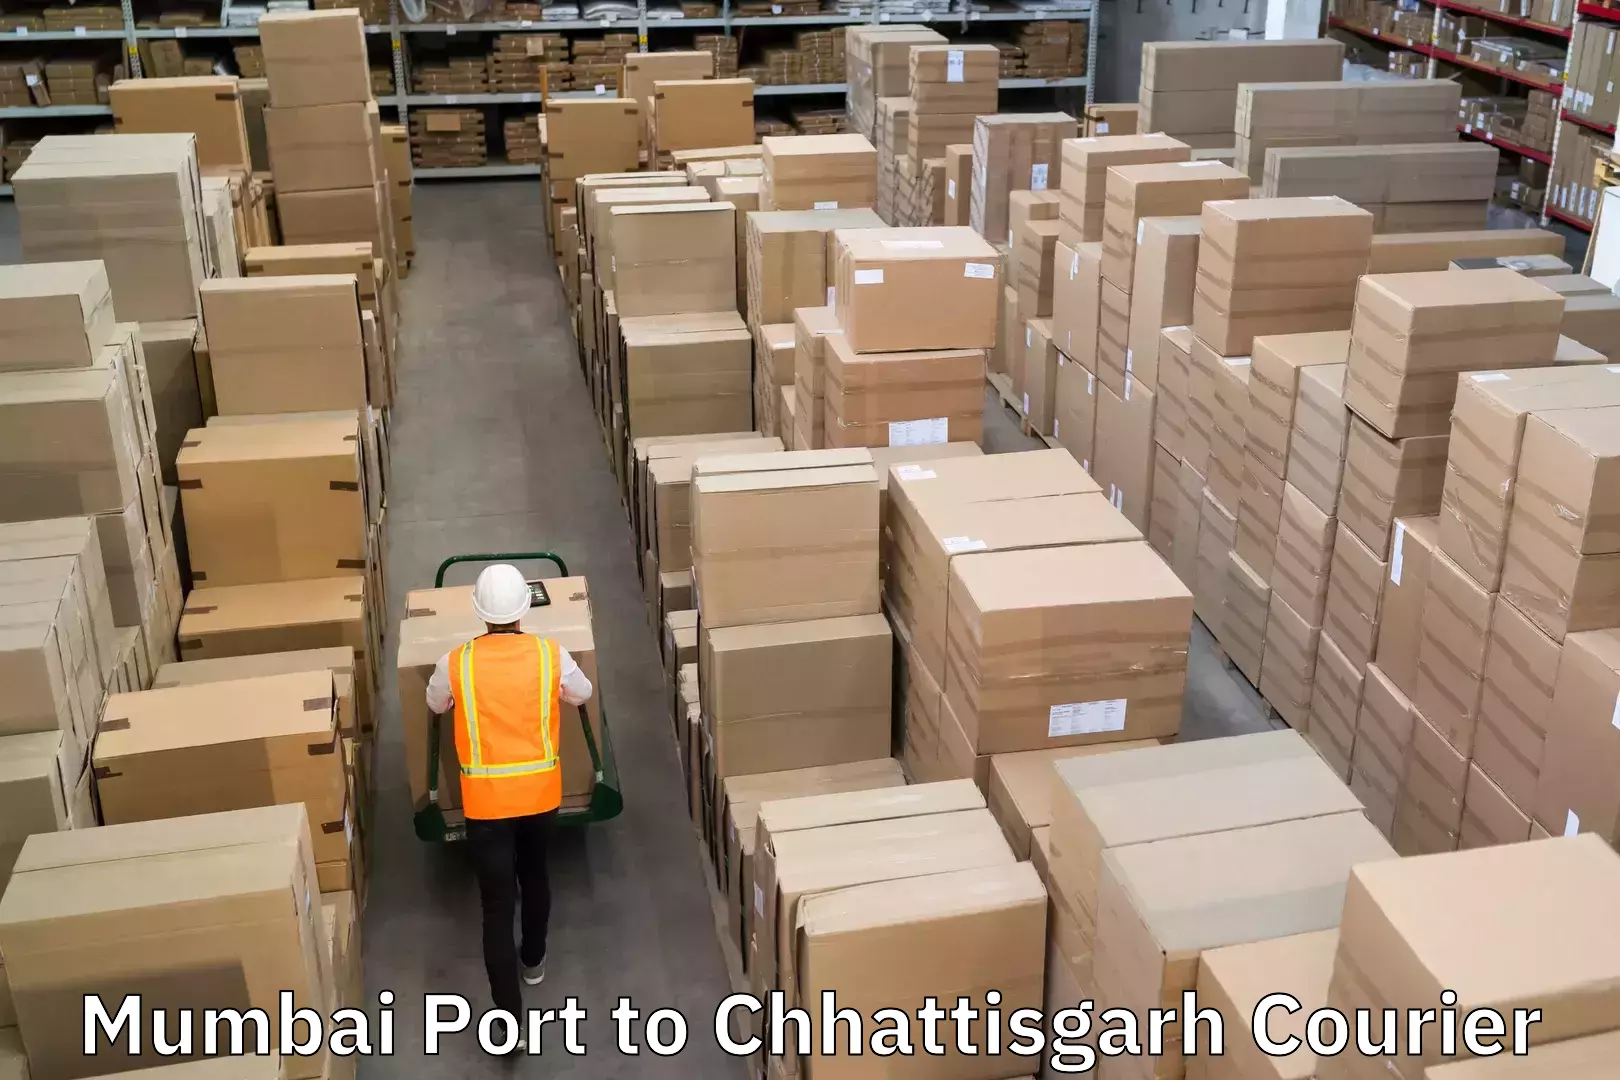 Courier membership Mumbai Port to Chhattisgarh